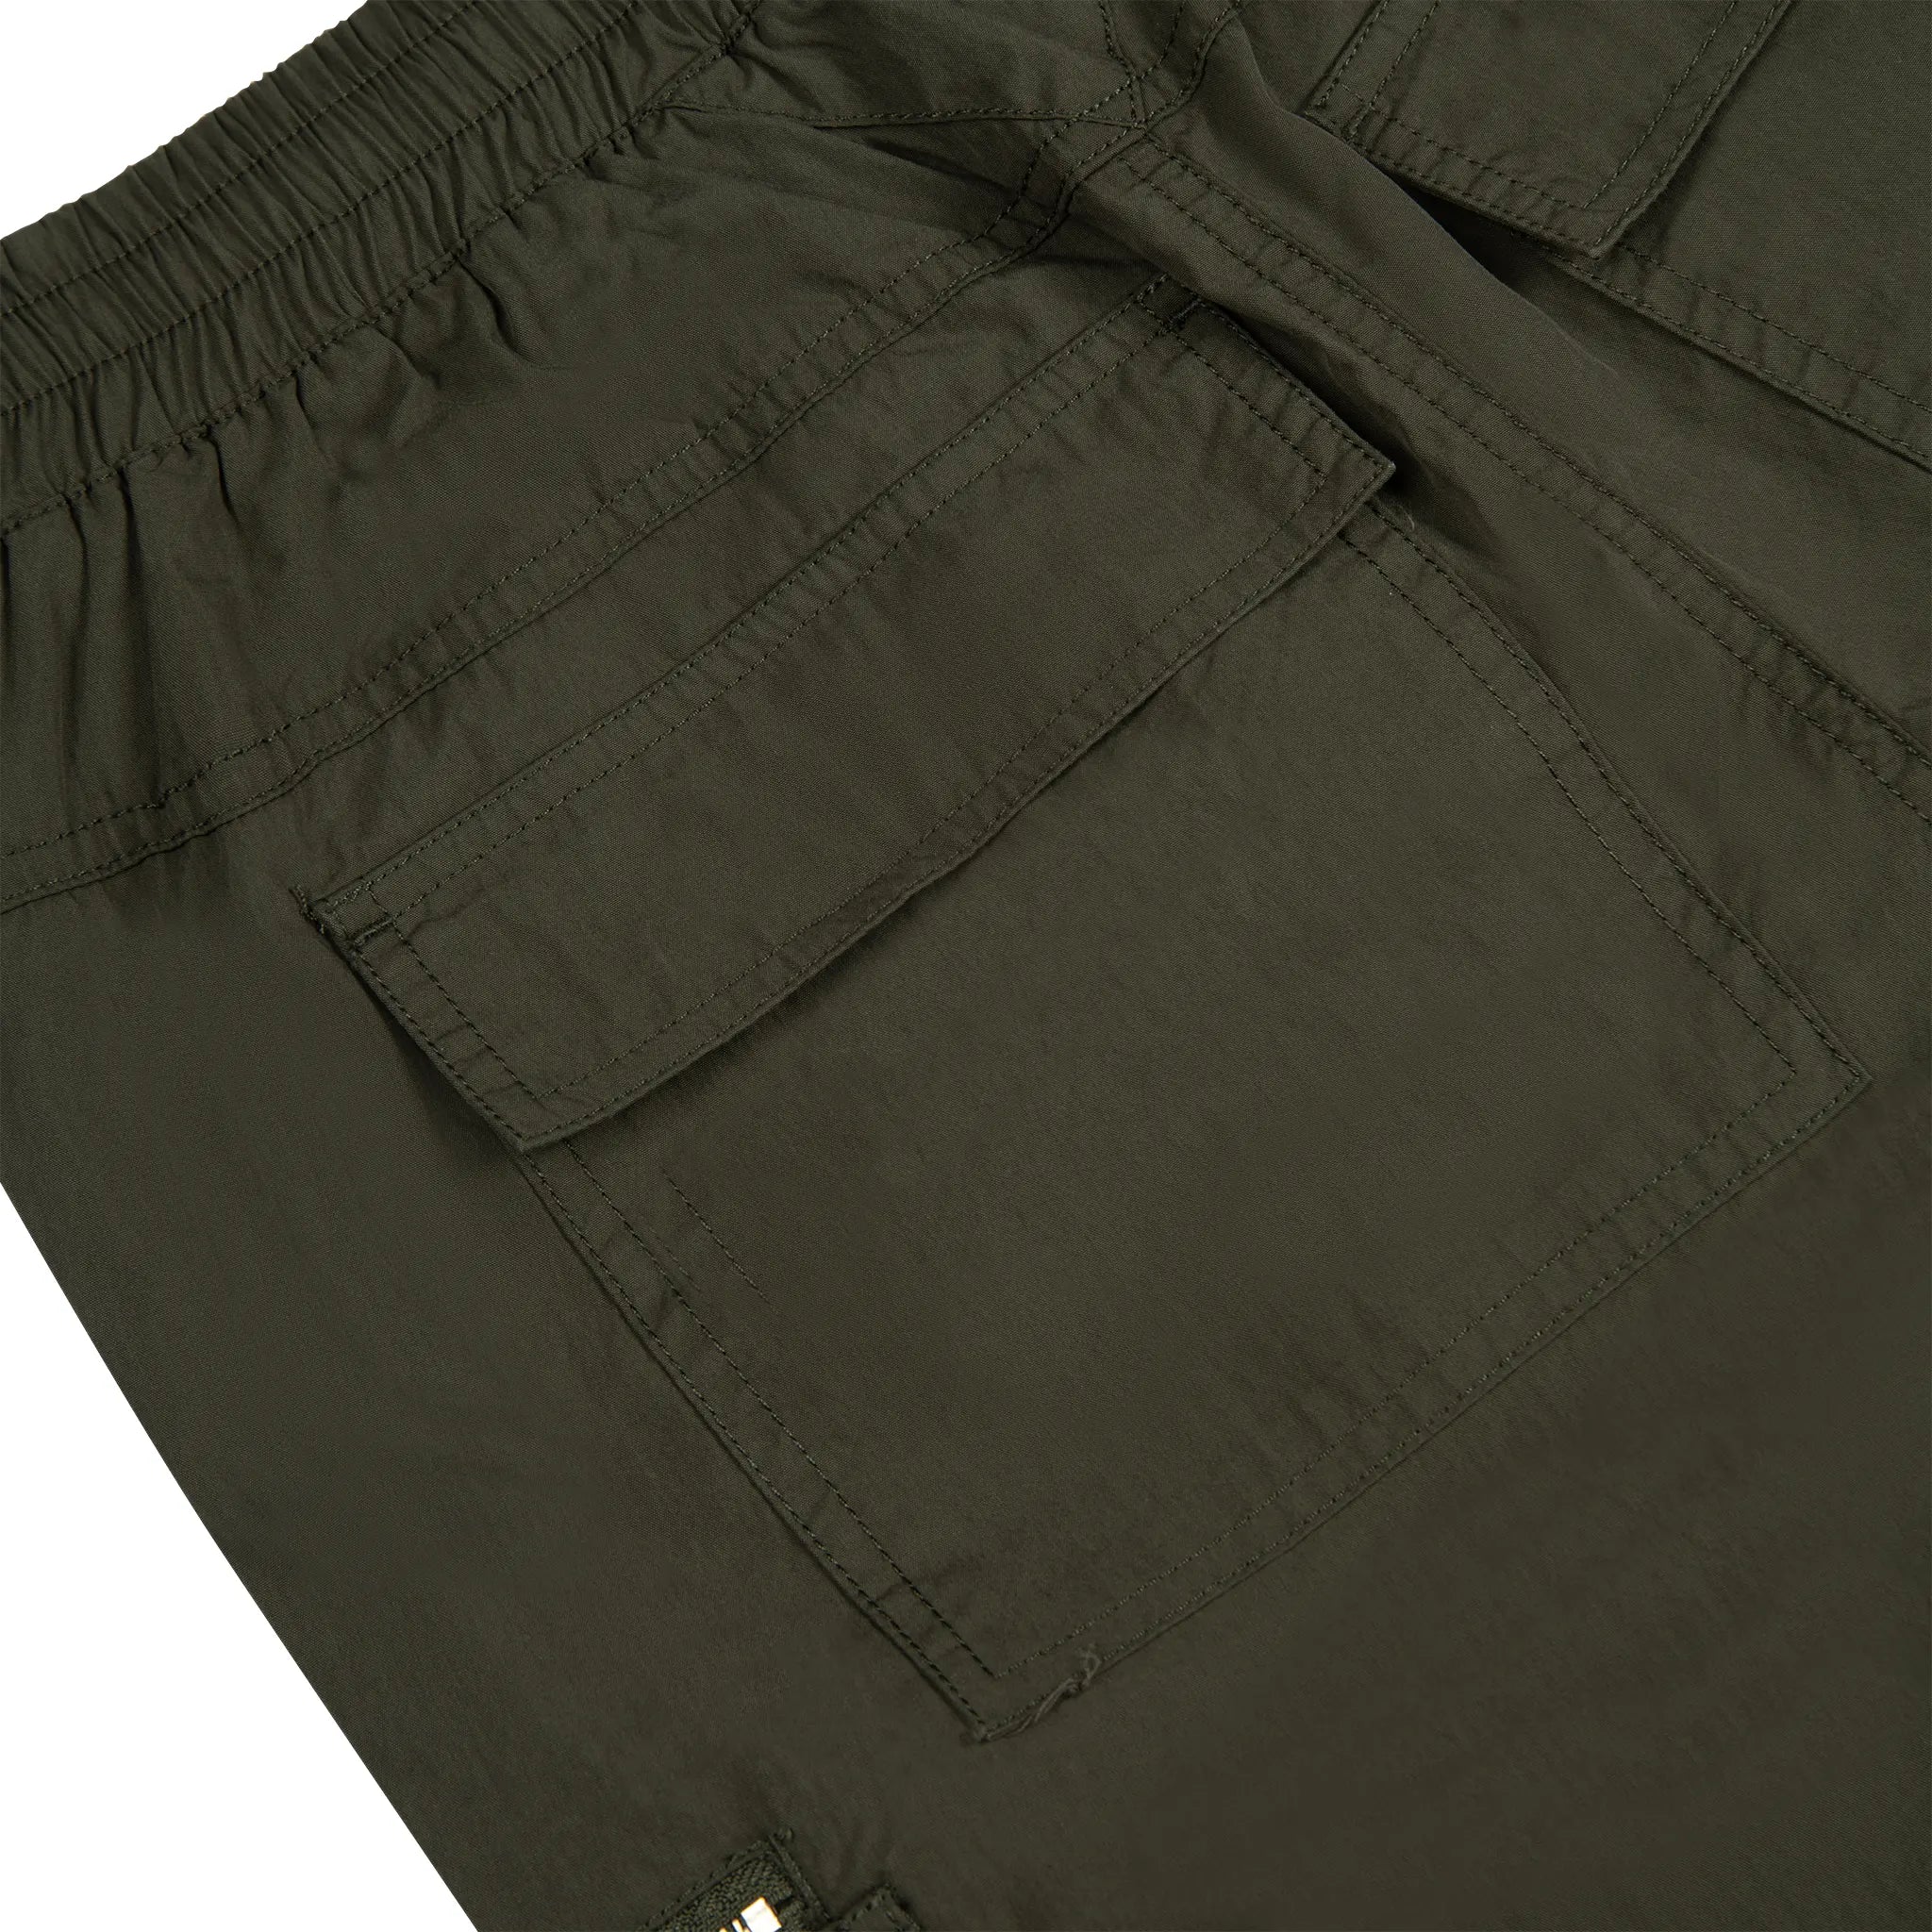 Back pocket view of SIARR Military Shorts Dark Green